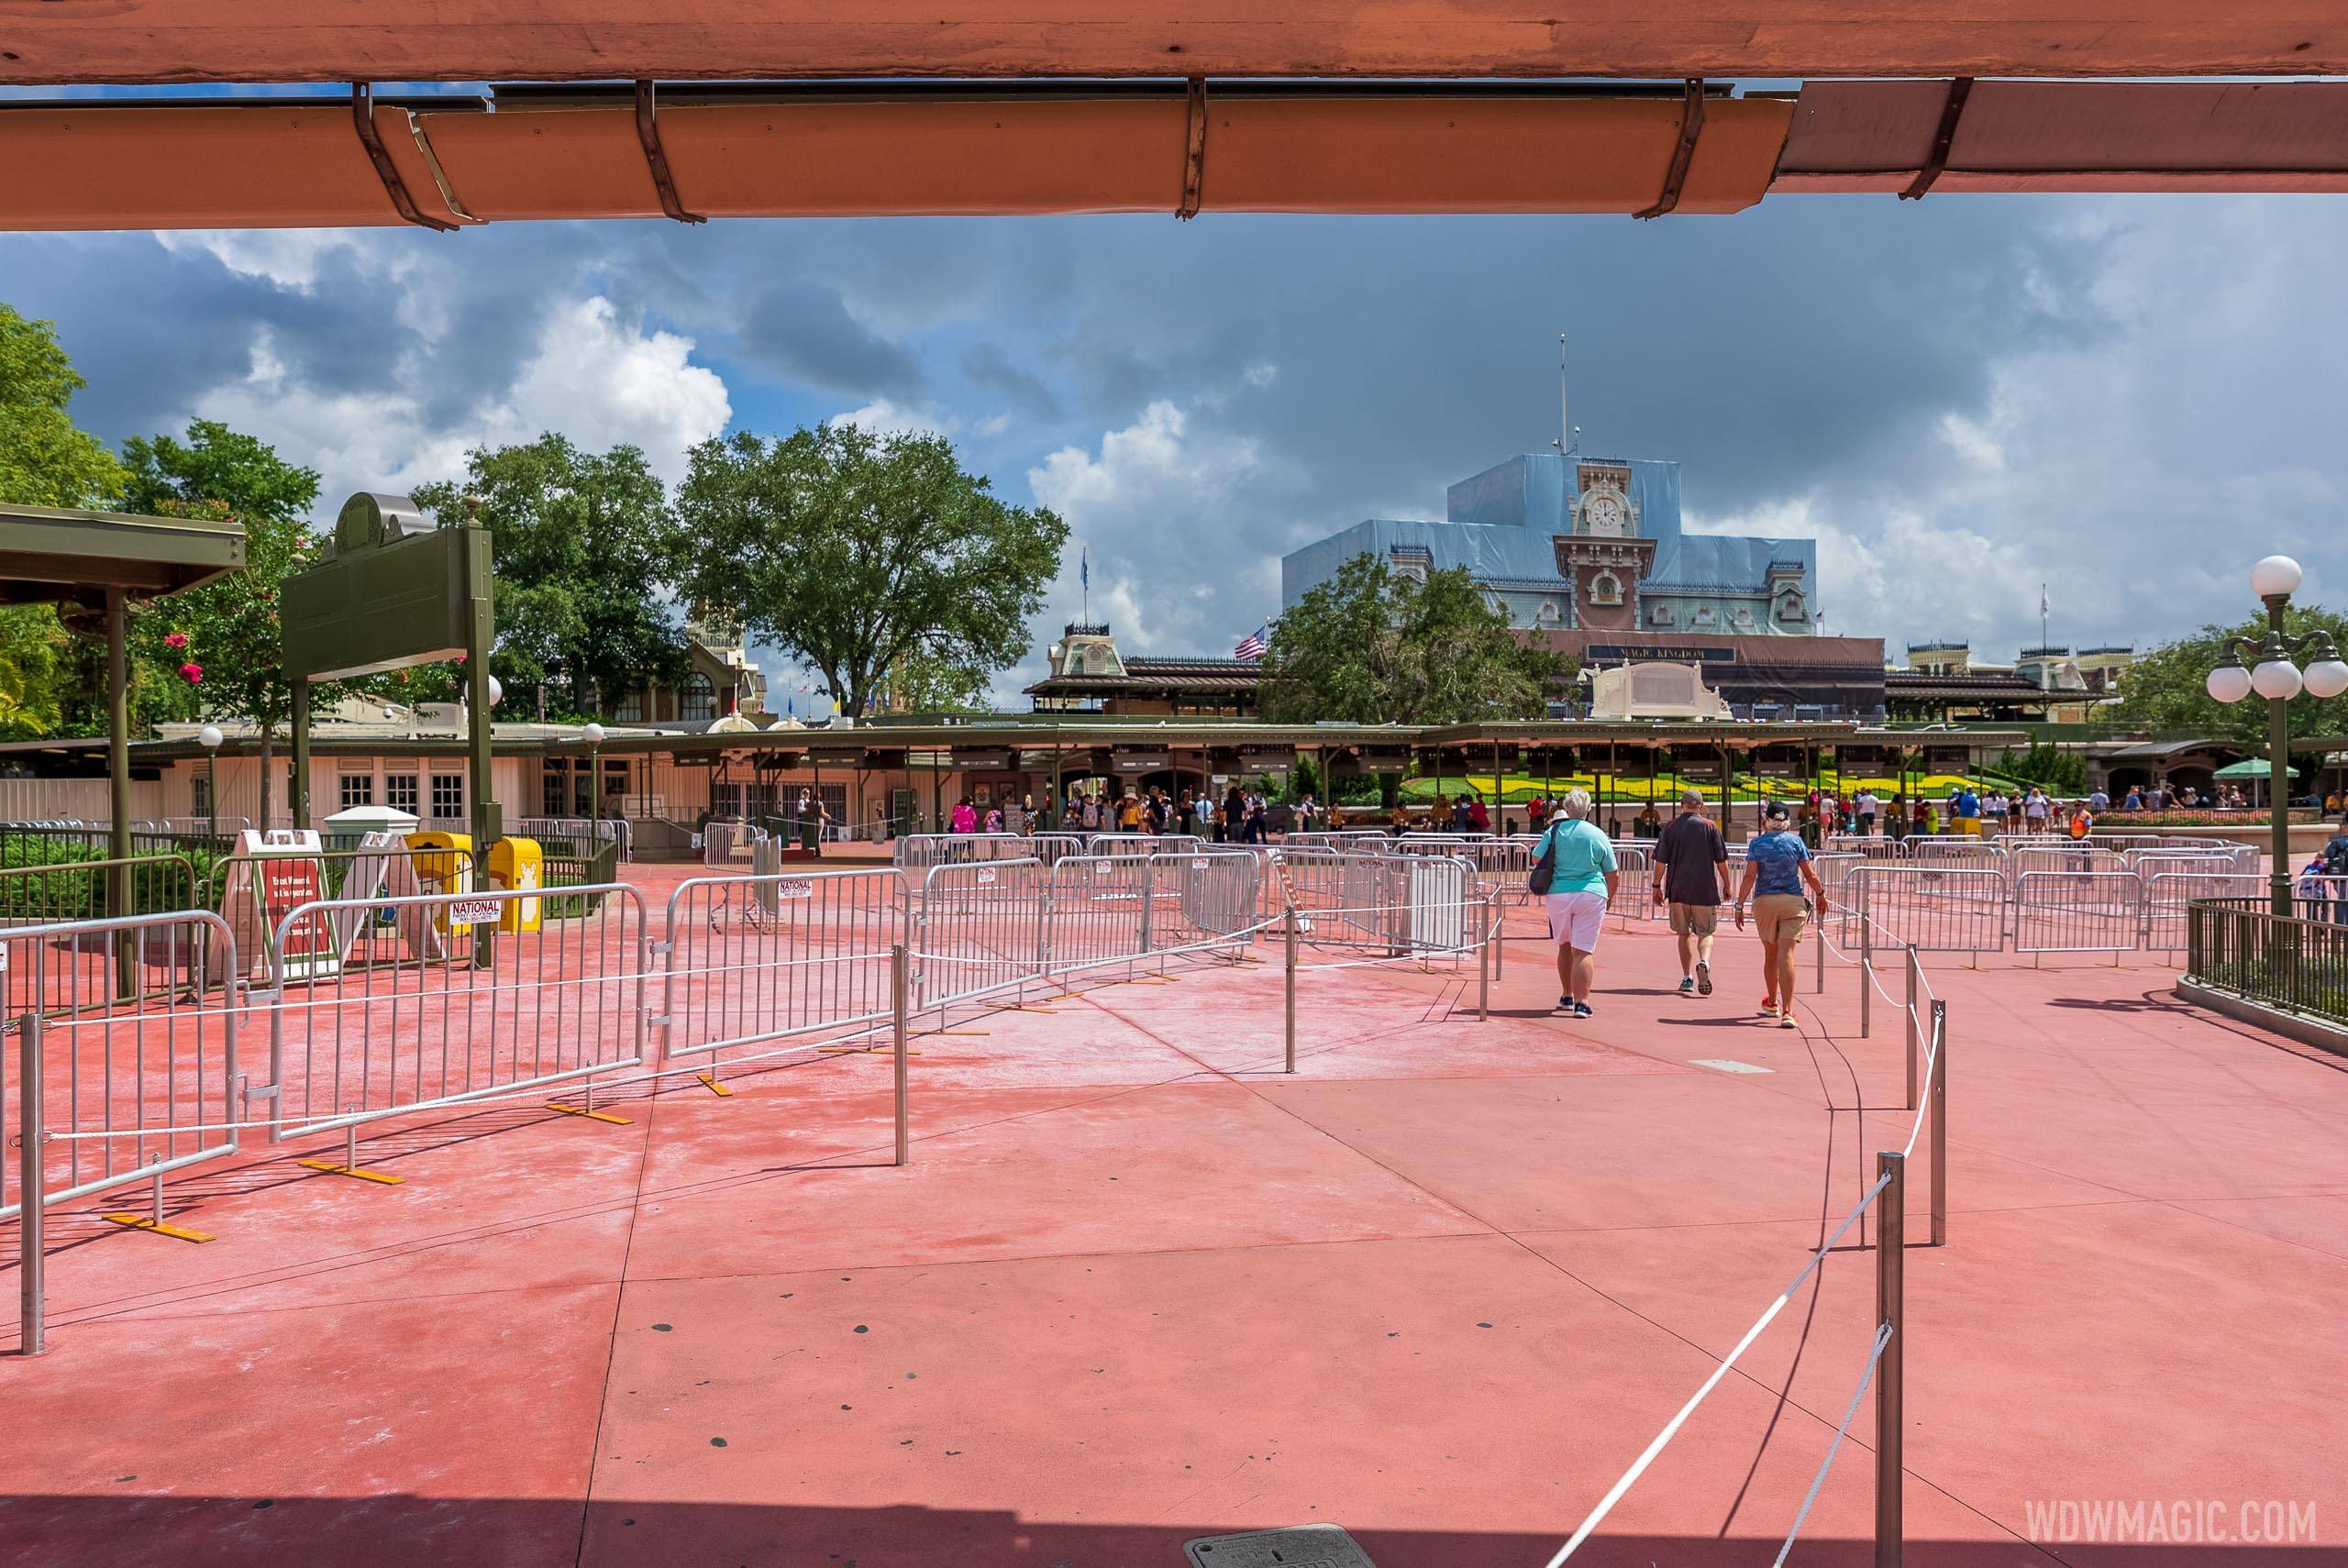 Temporary crowd control fencing at Magic Kingdom main entrance